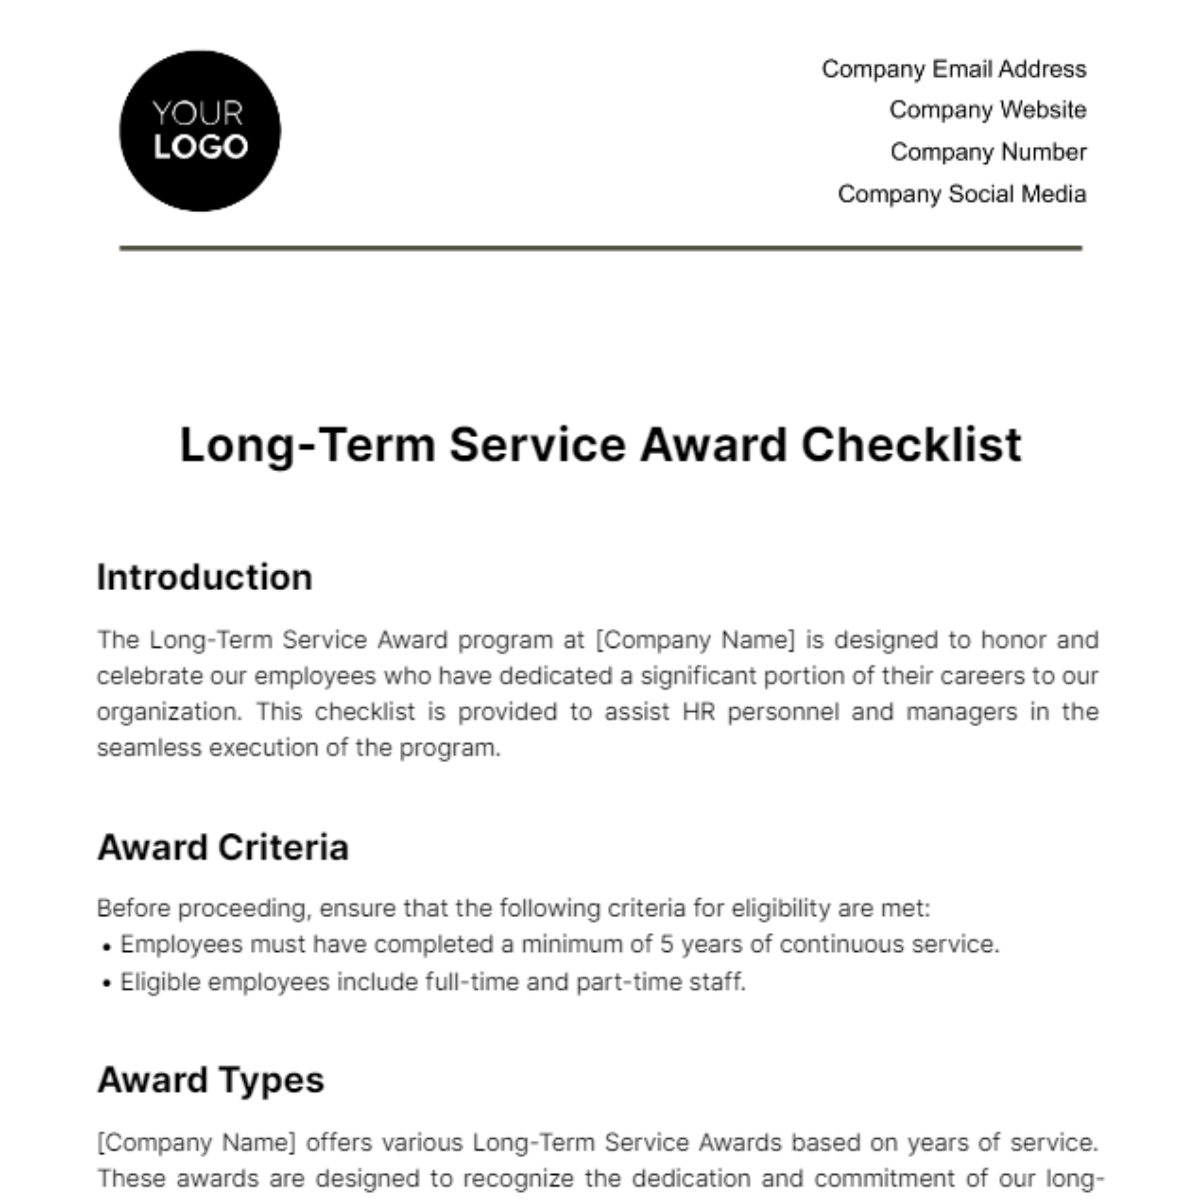 Long-Term Service Award Checklist HR Template